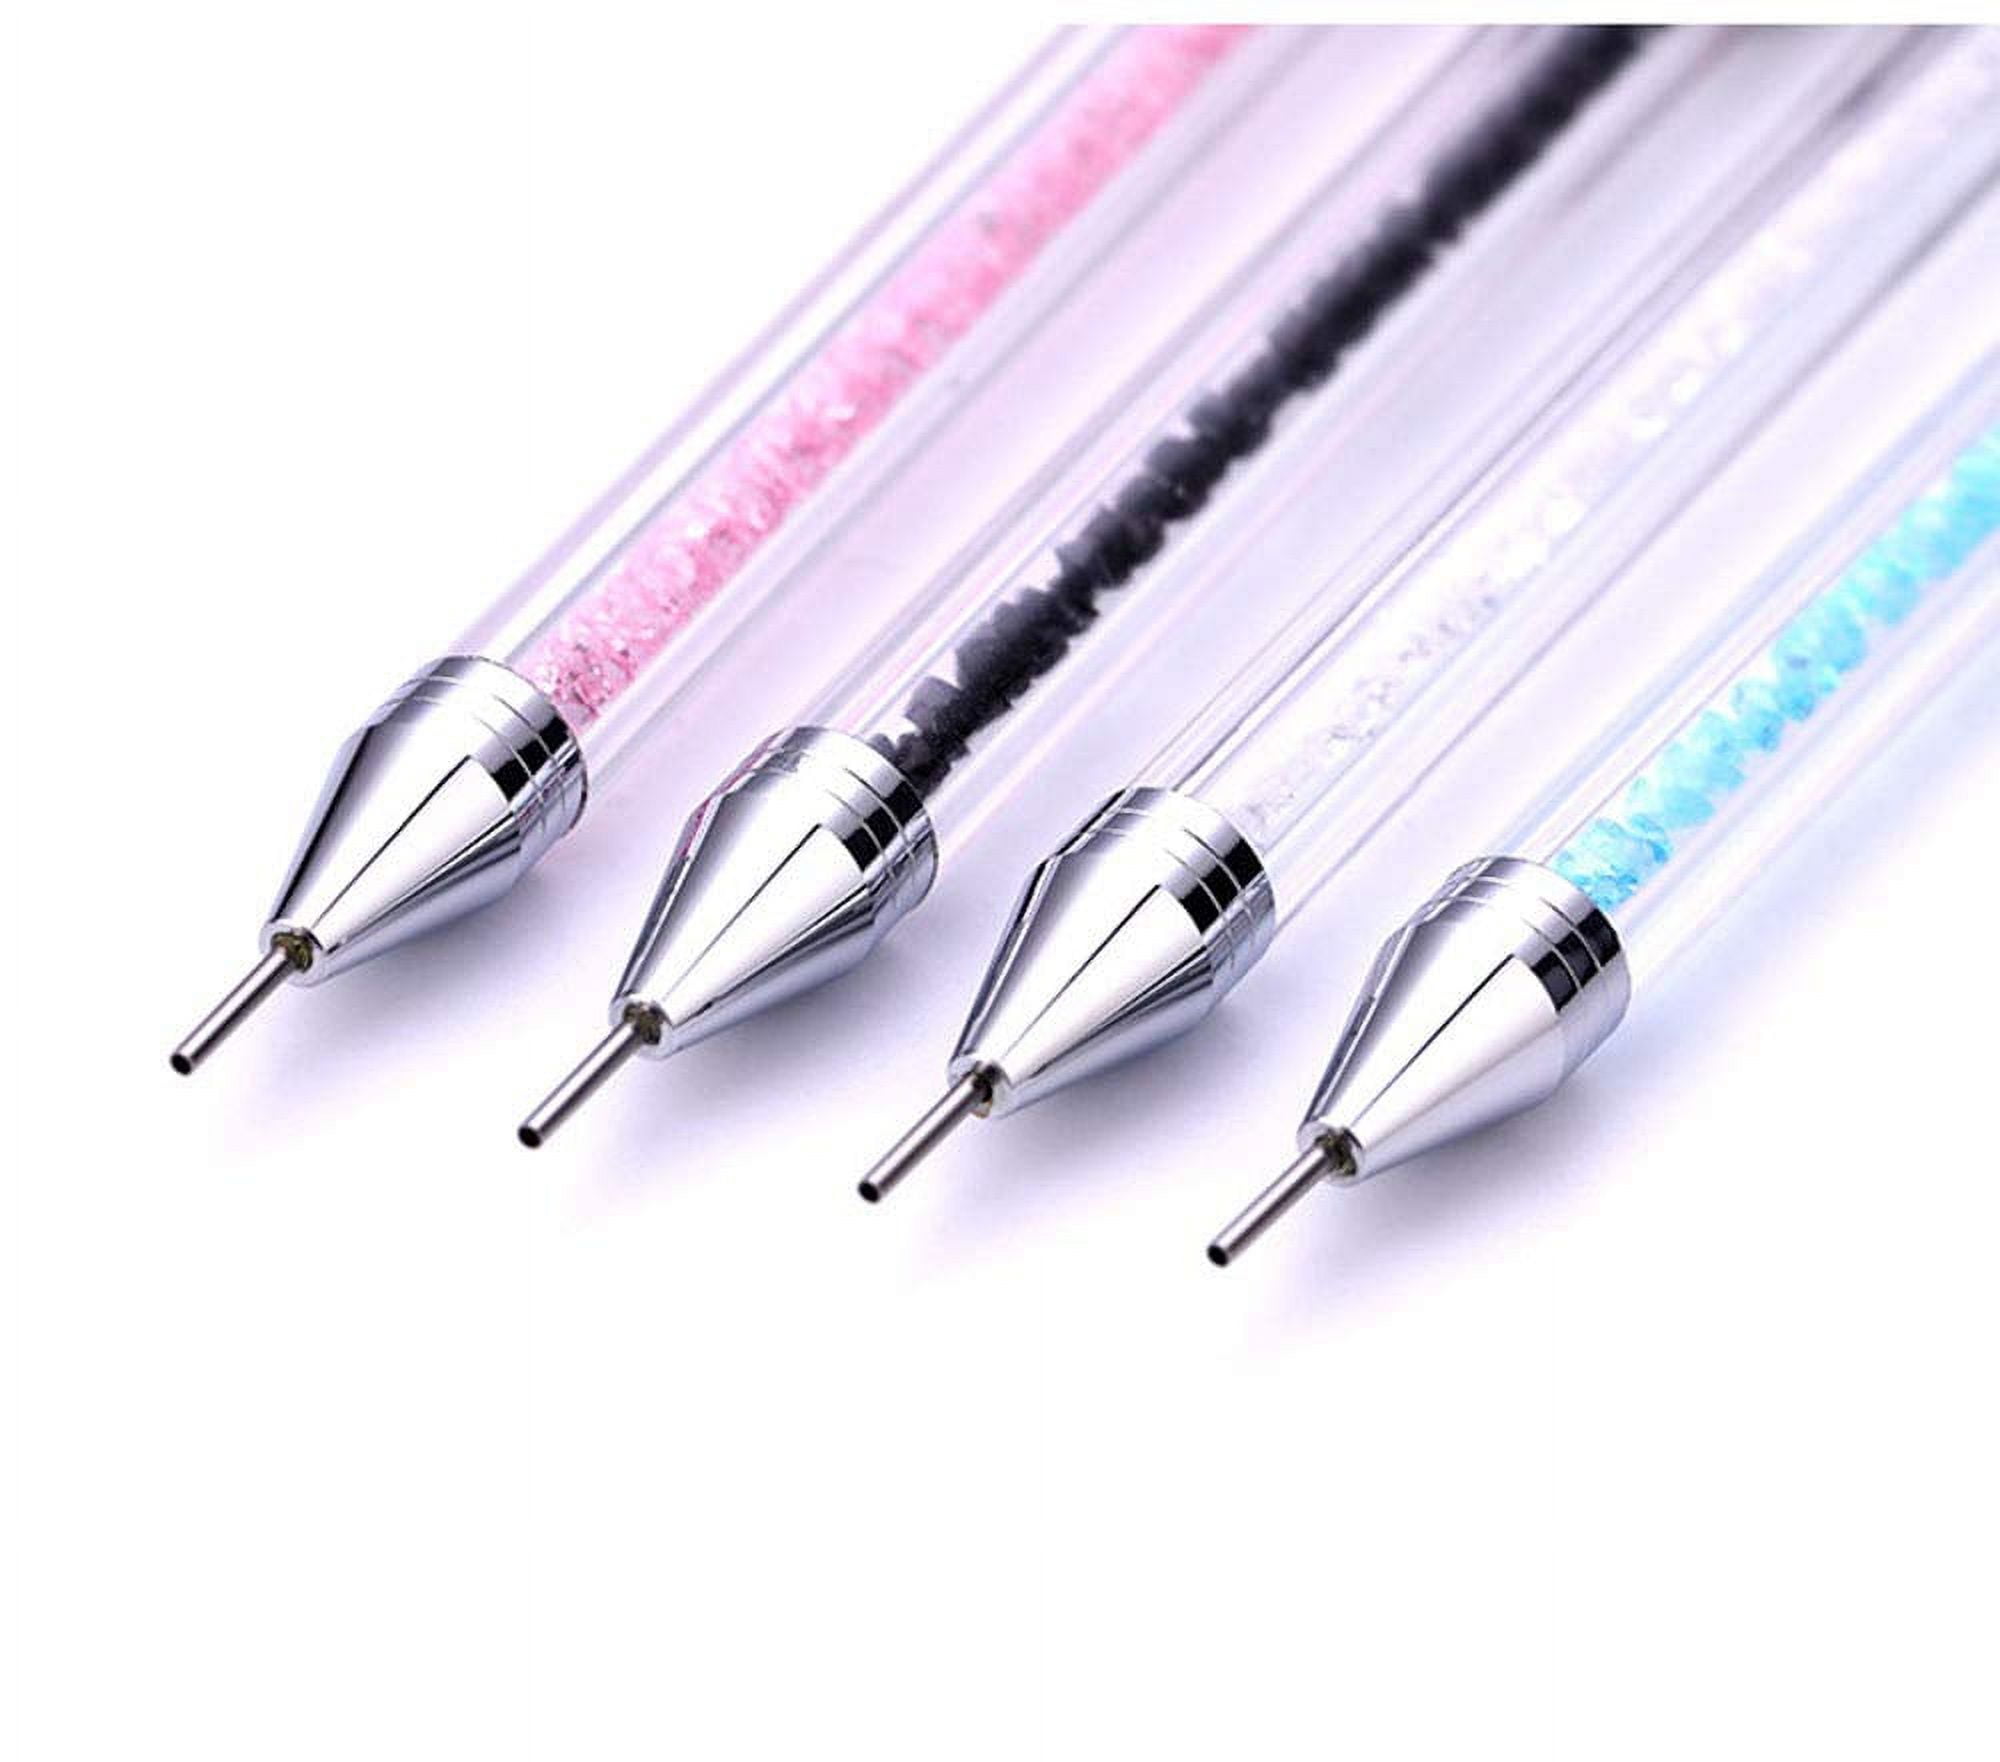 Dual-head Rhinestone Picker Pen - Wax head / Dot head / Dotting Tool / –  Dynamic Nail Supply